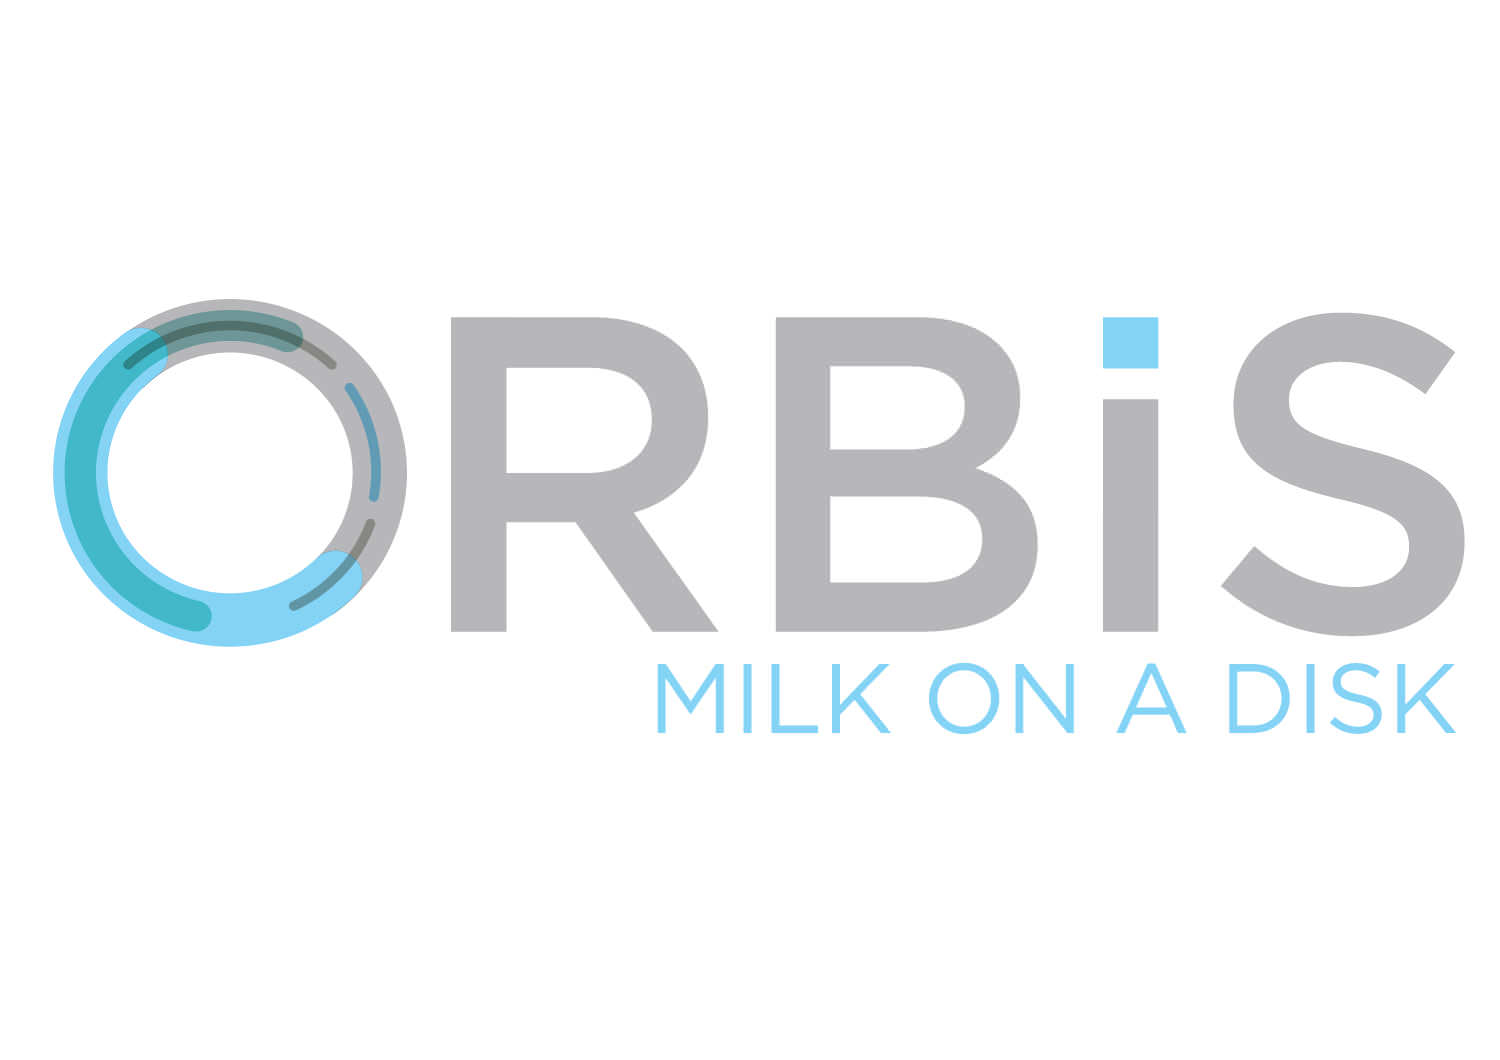 Orbis Logo - Orbis Logo